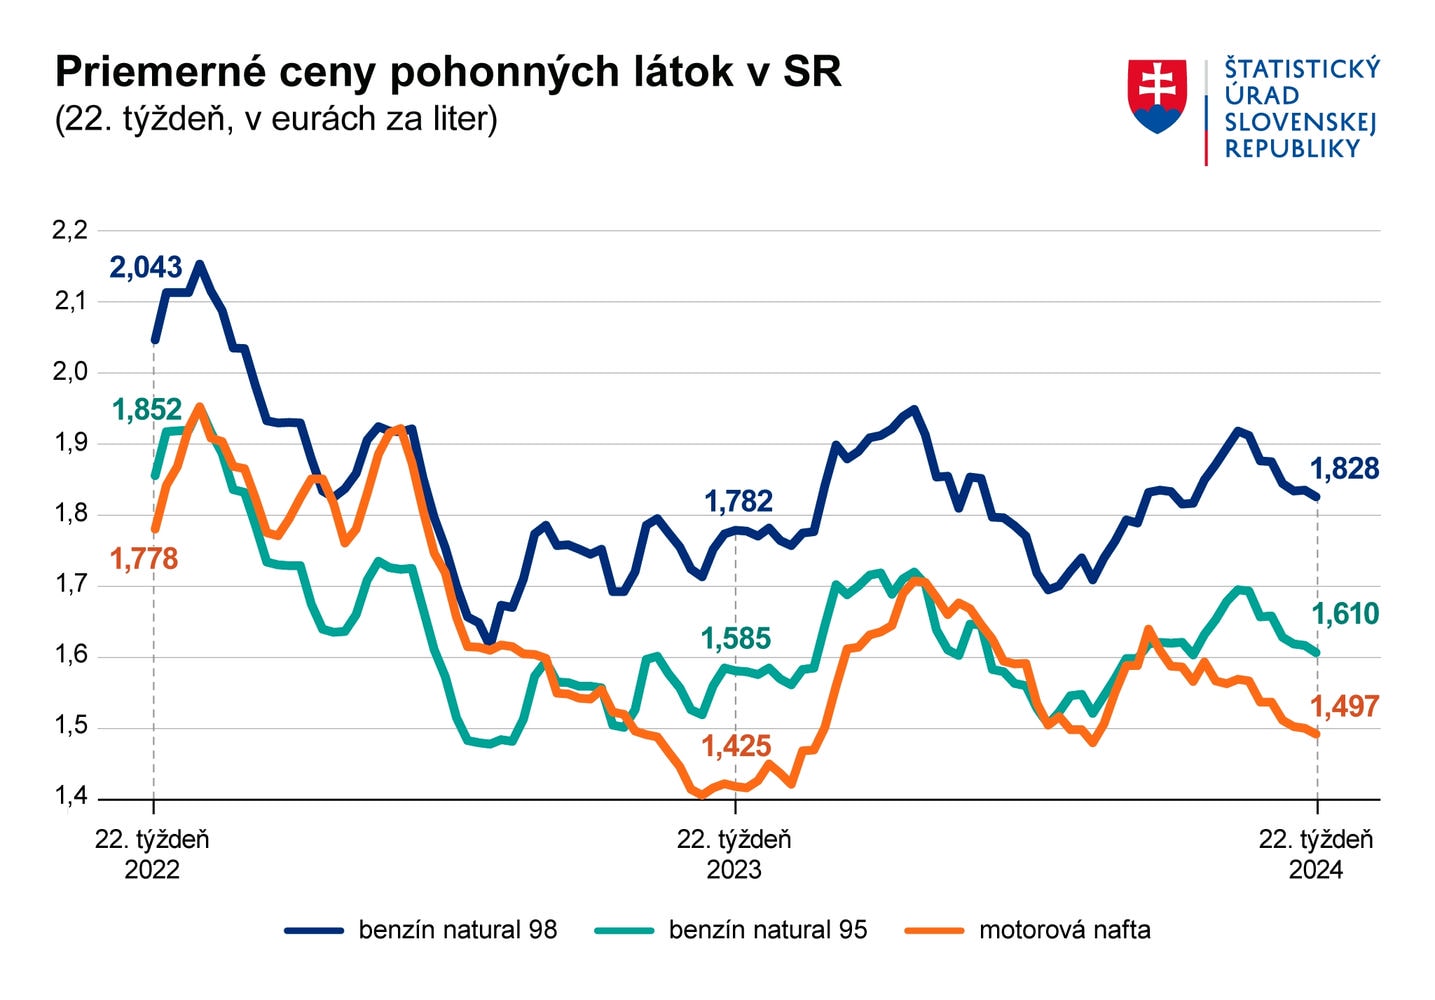 Priemerné ceny pohonných hmôt na Slovensku